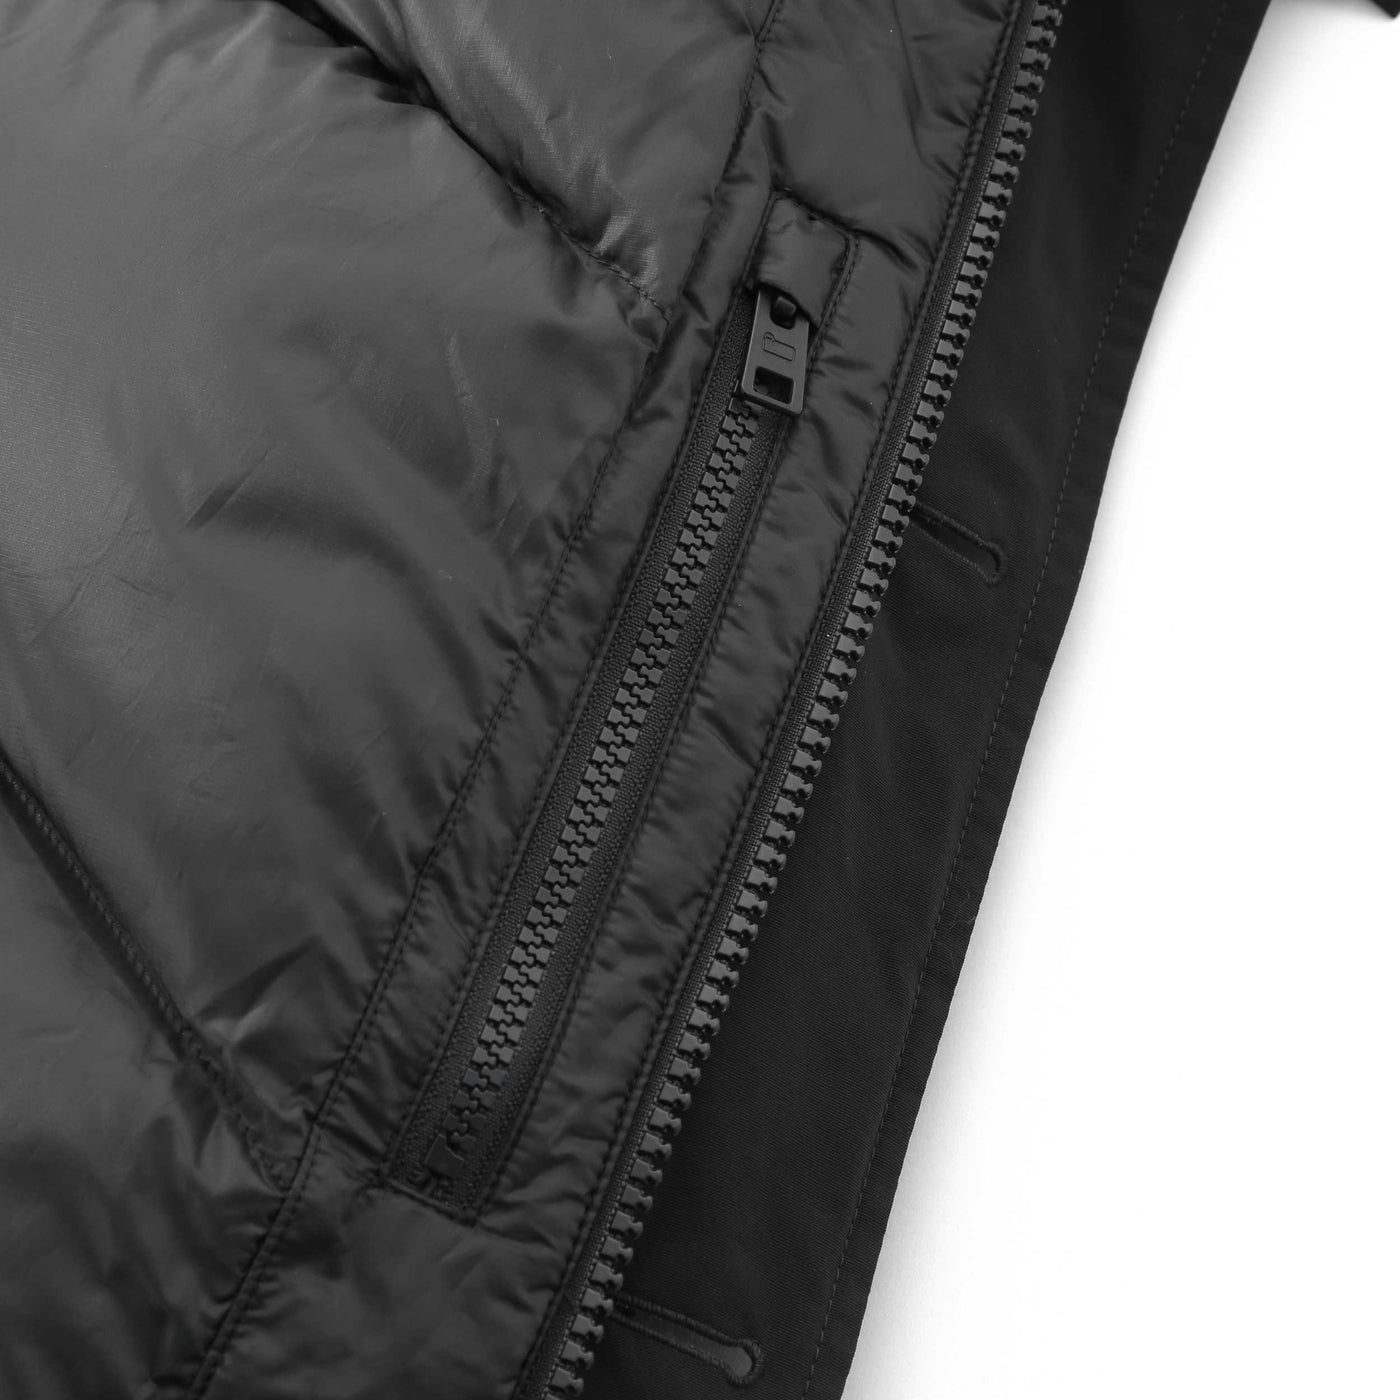 Woolrich Polar Bomber Jacket in Black Inside Pocket